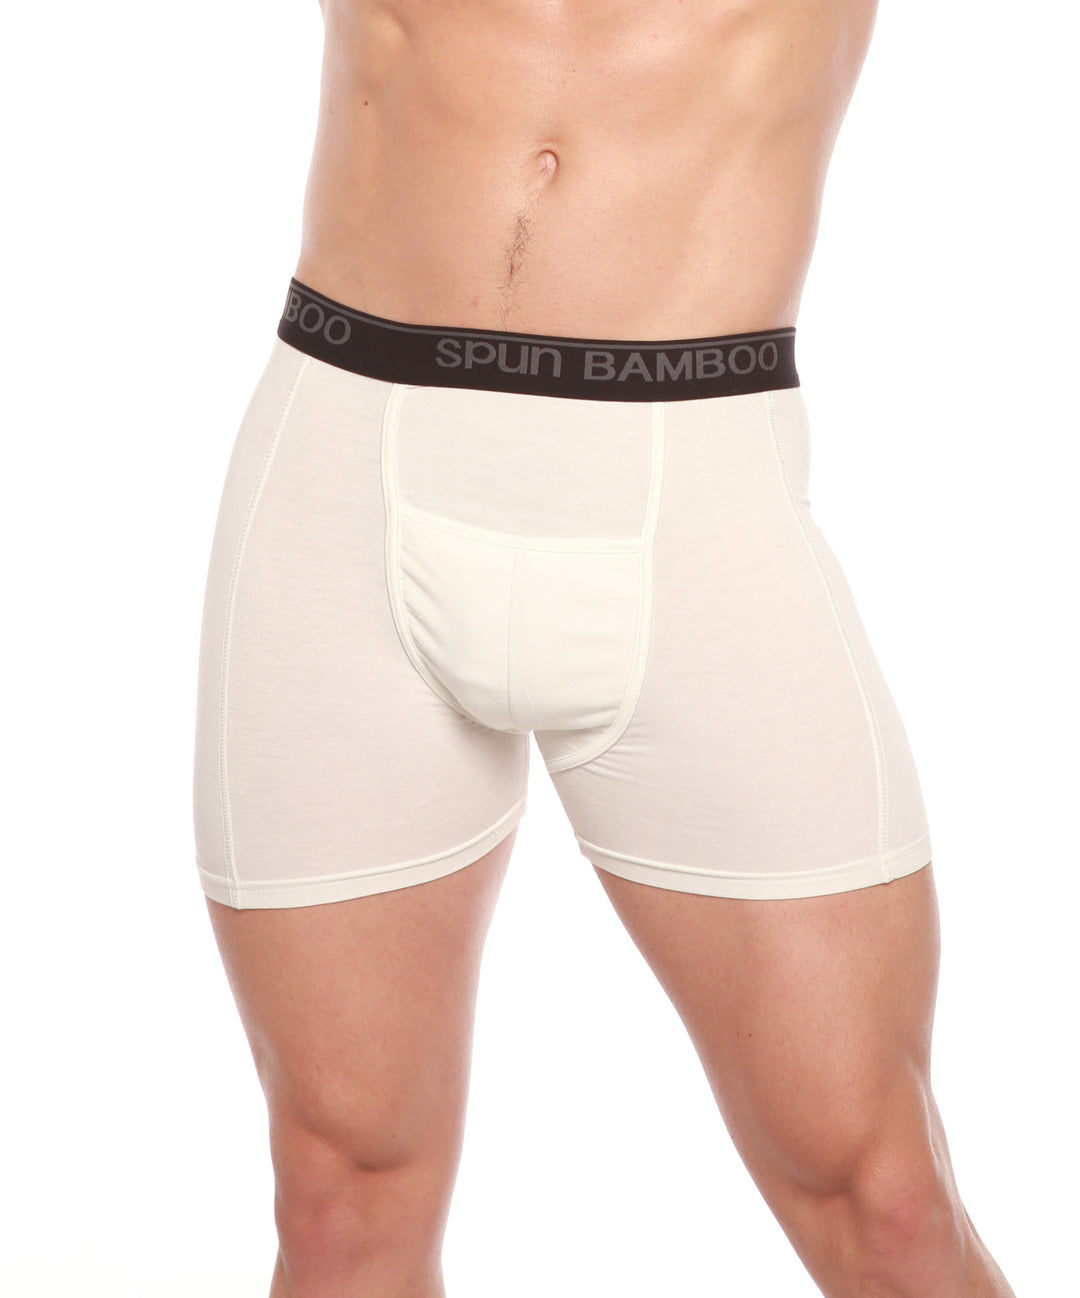 Bamboo Boxer, Men's Bamboo Underwear